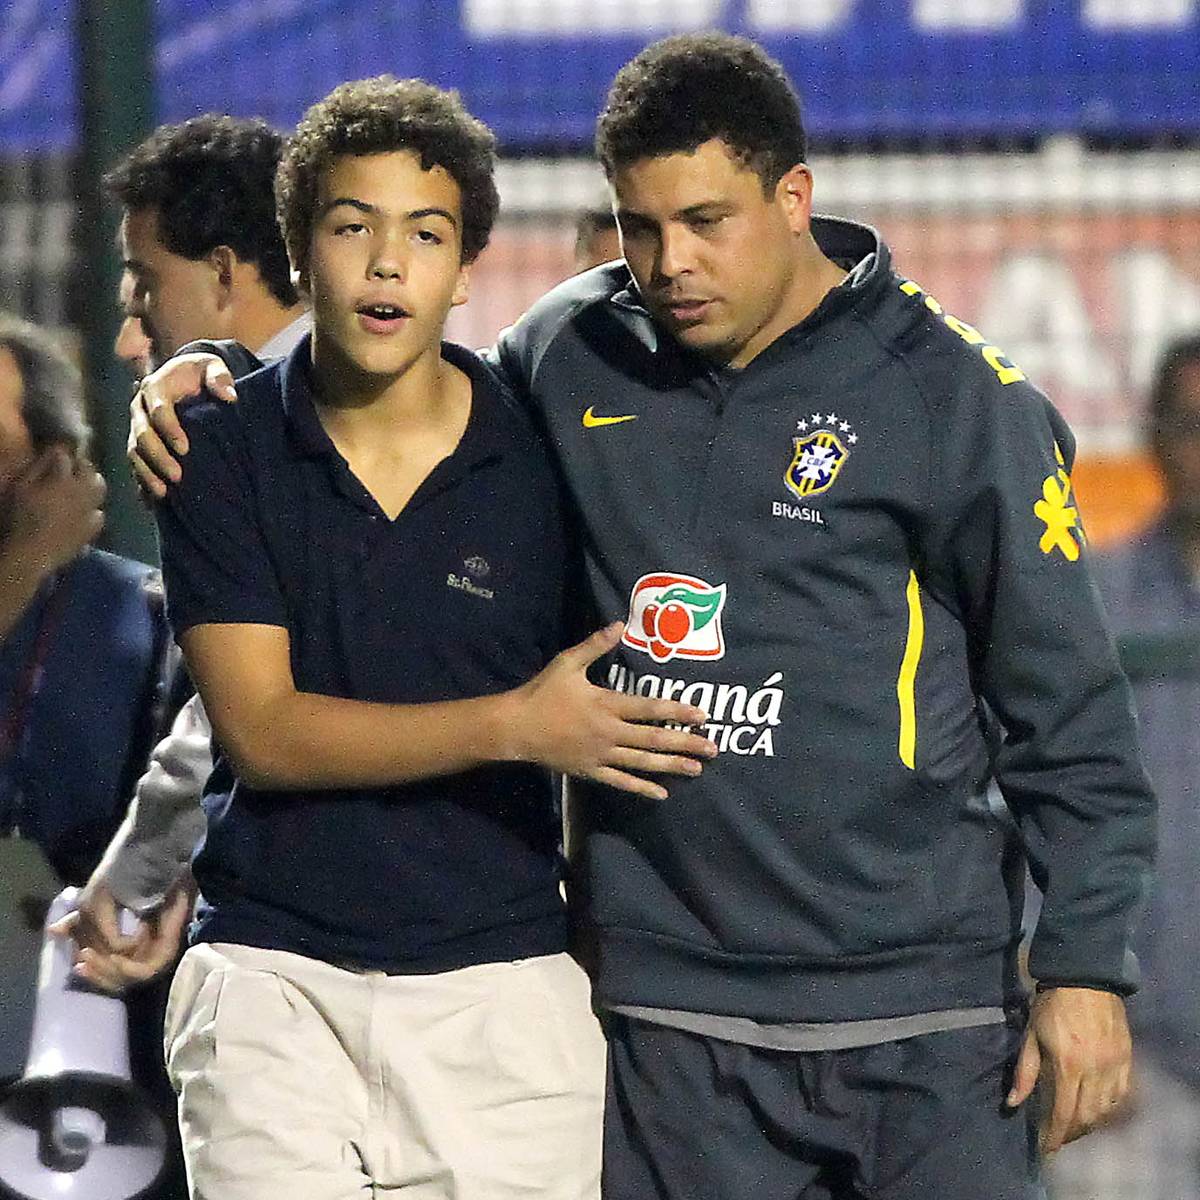 Sohn Von Ronaldo Ronald Nazario De Lima Spielt Bei Maccabi Games